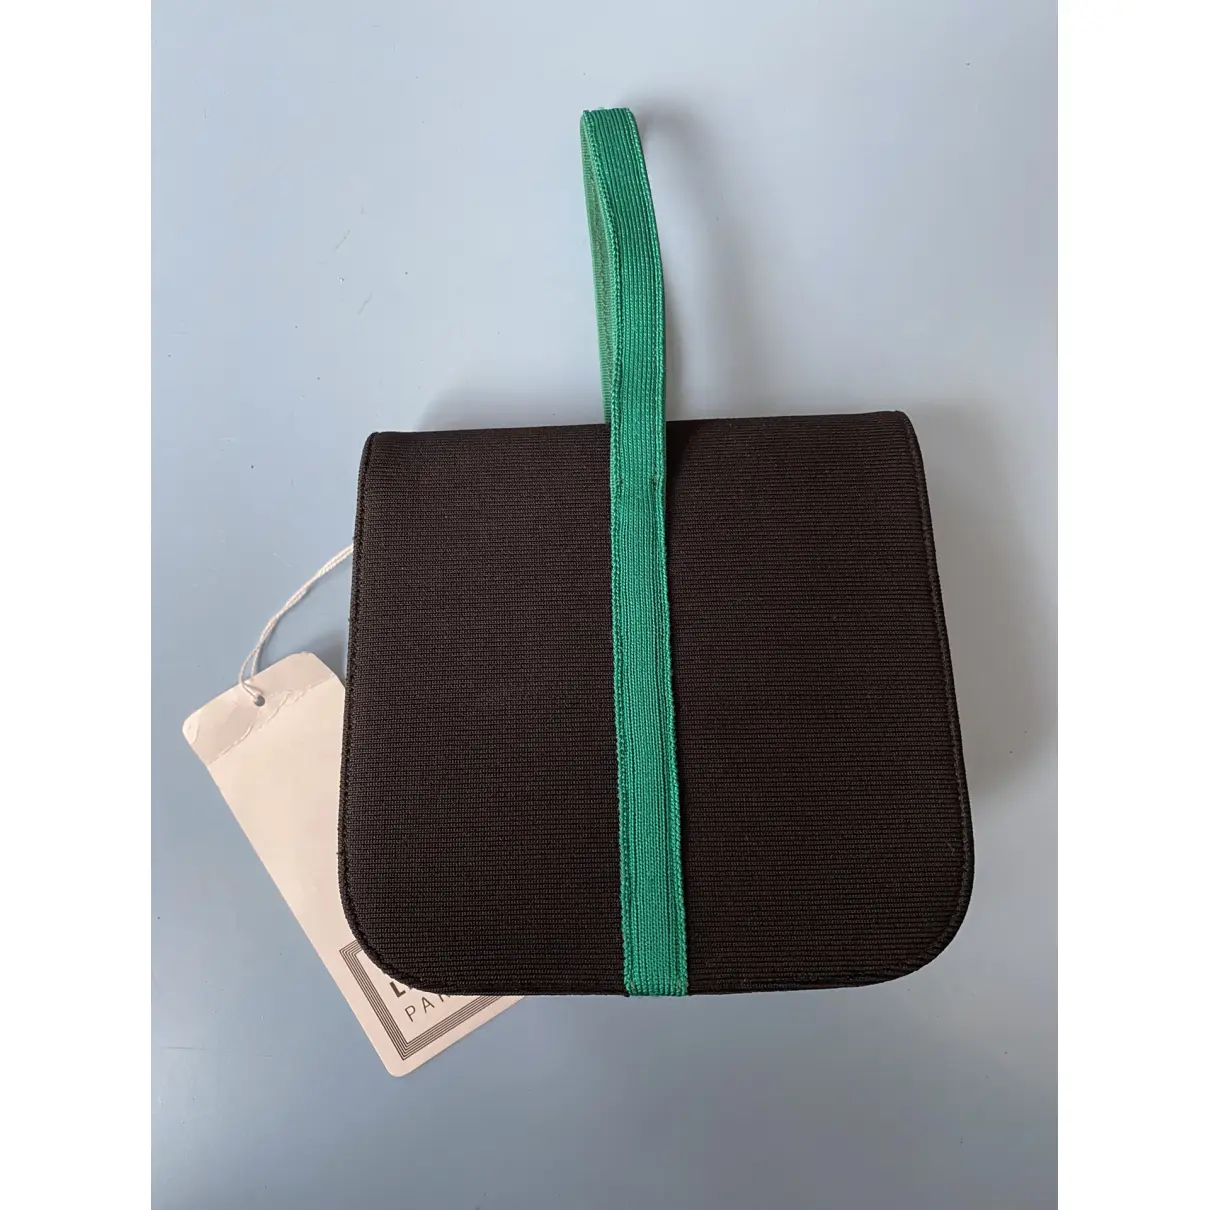 Buy Herve Leger Silk clutch bag online